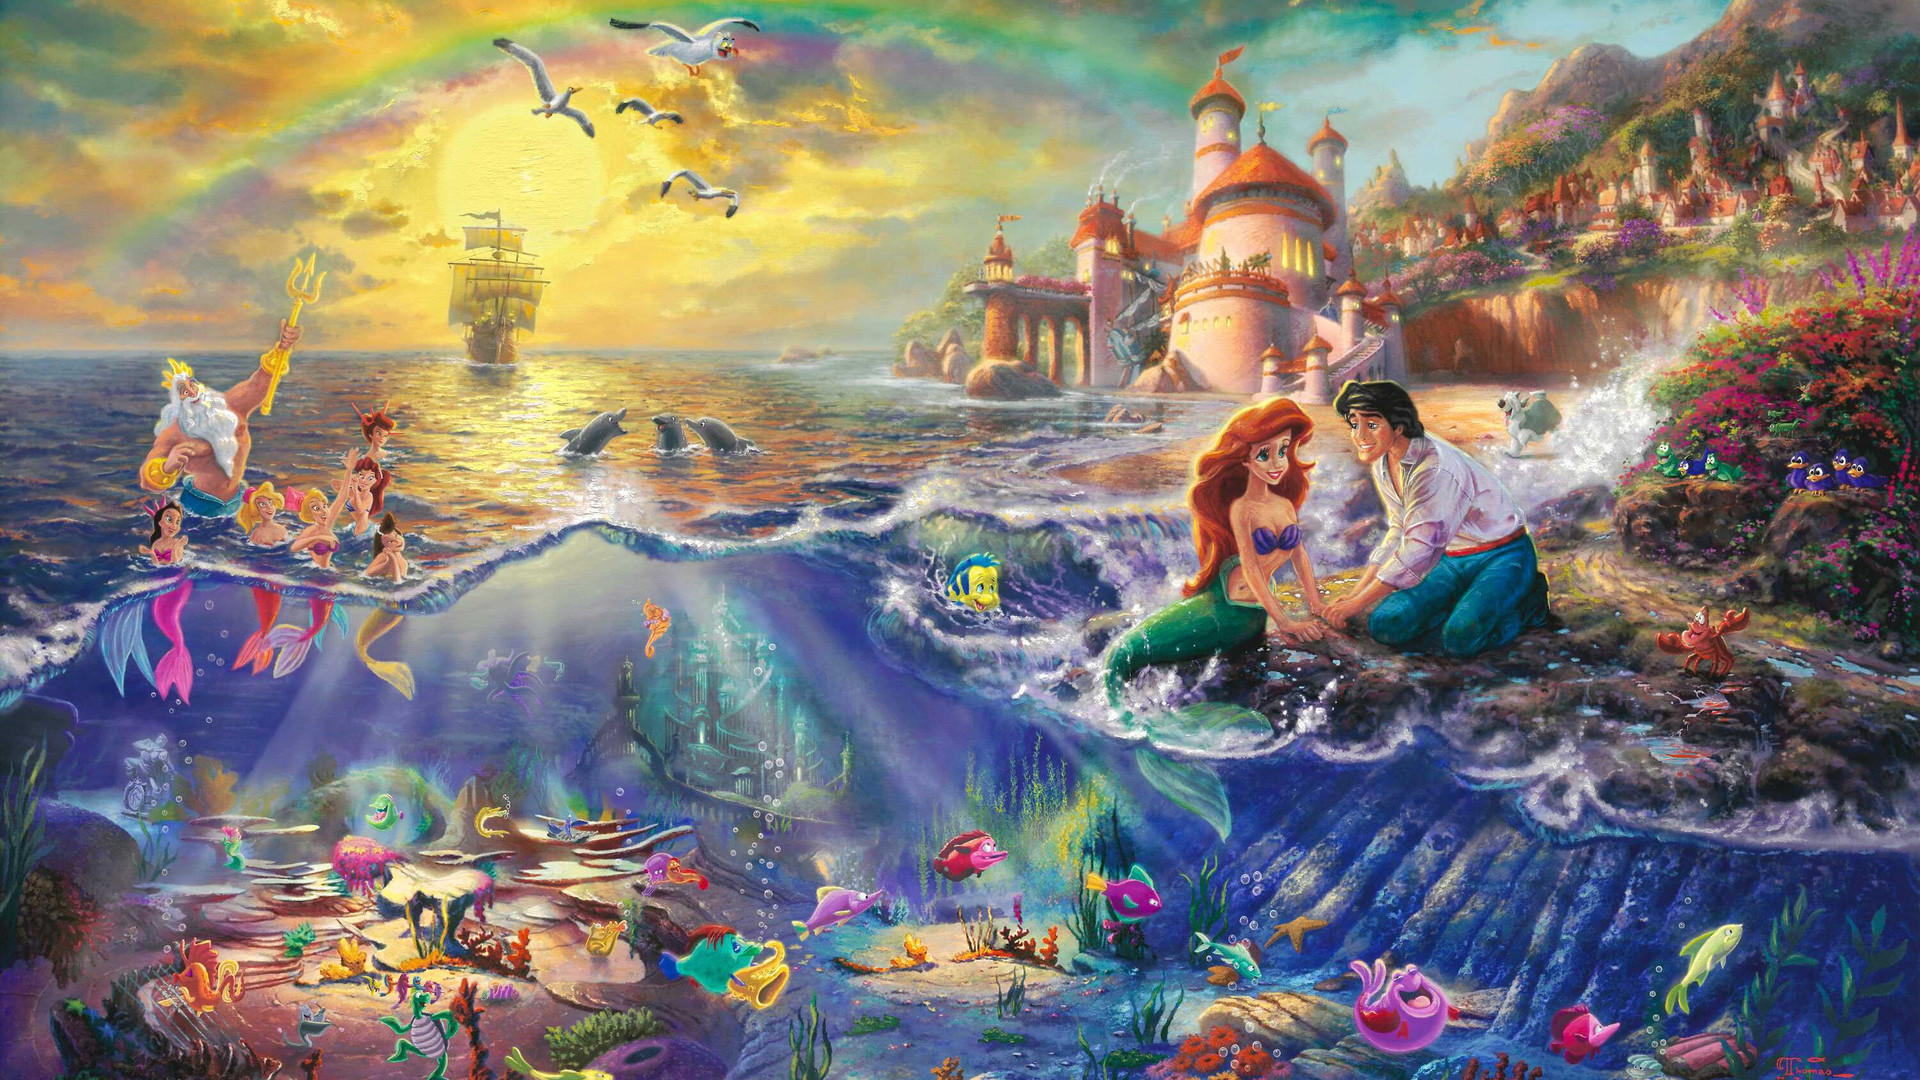 1920x1080 ... Wallpaper Gallery Â· Cool Disney Backgrounds ...